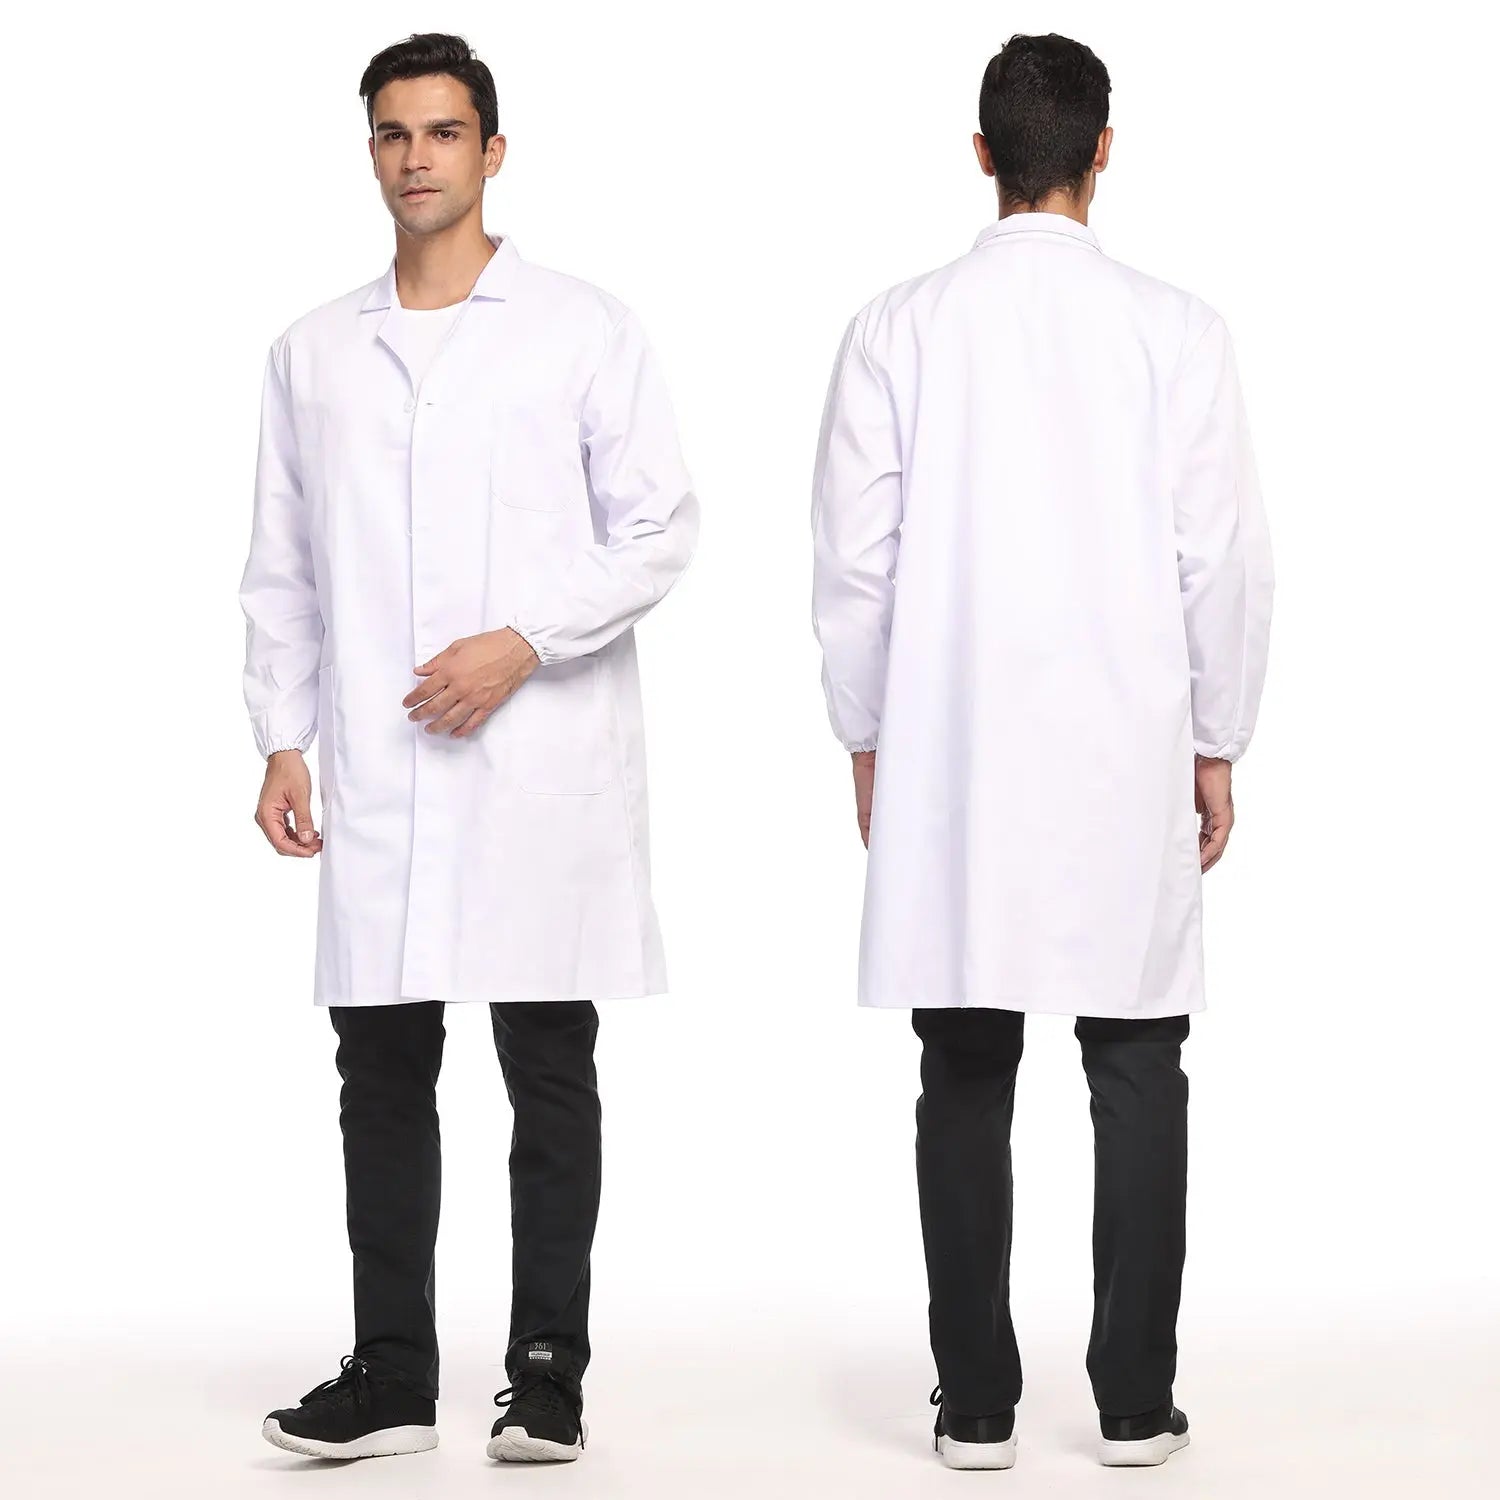 Unisex Lab Coat with Elastic Cuffs, 3 Pocket Full-Length Long Sleeve Lab Coat - StonyLab Lab Protections 